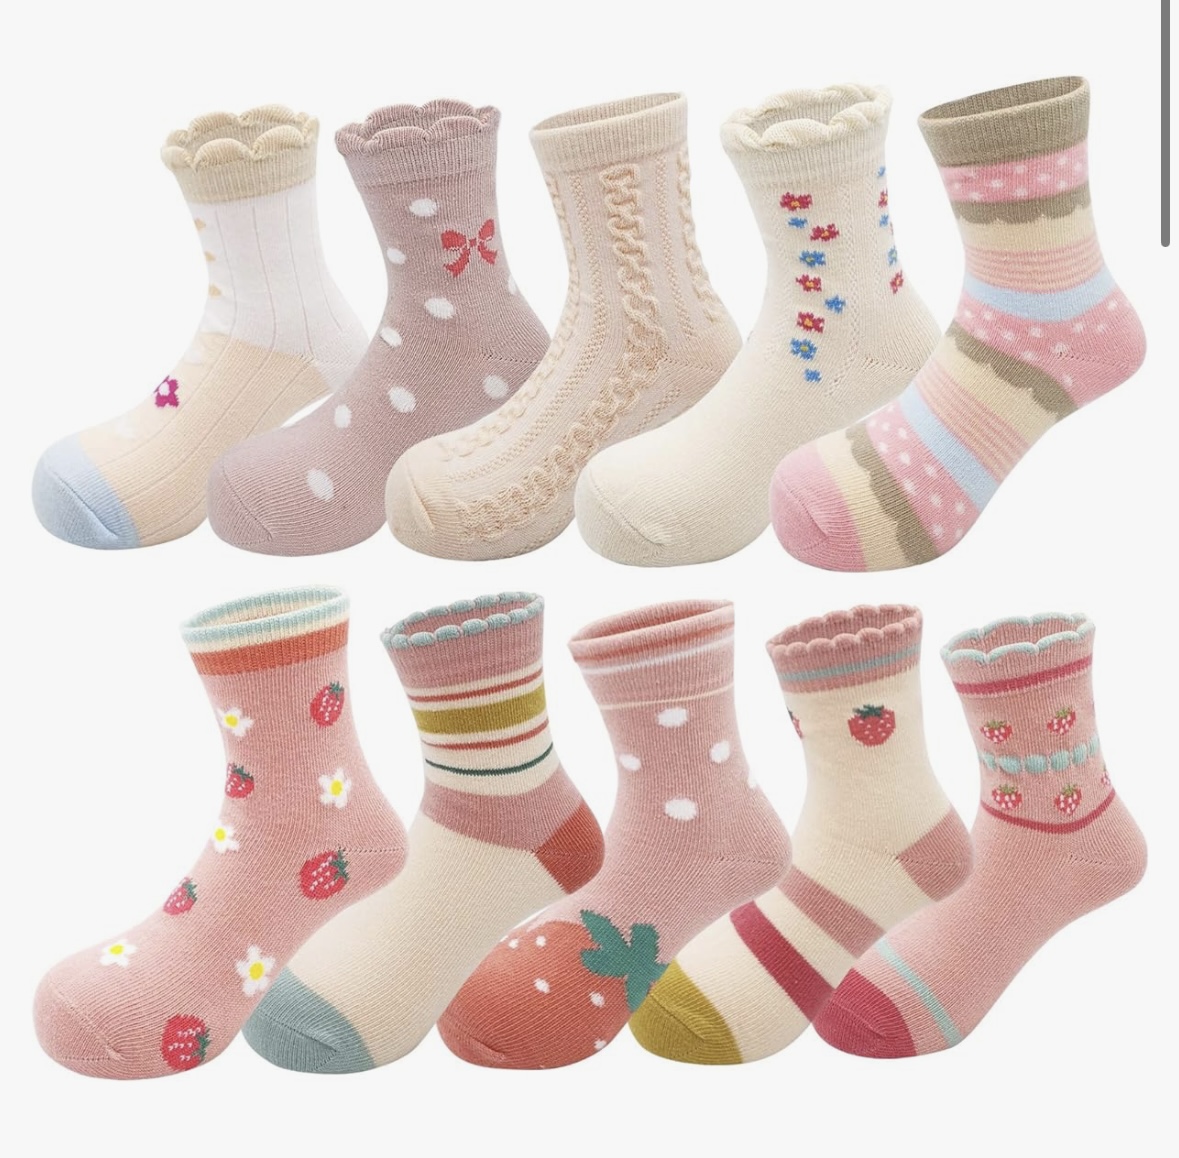 The cutest socks